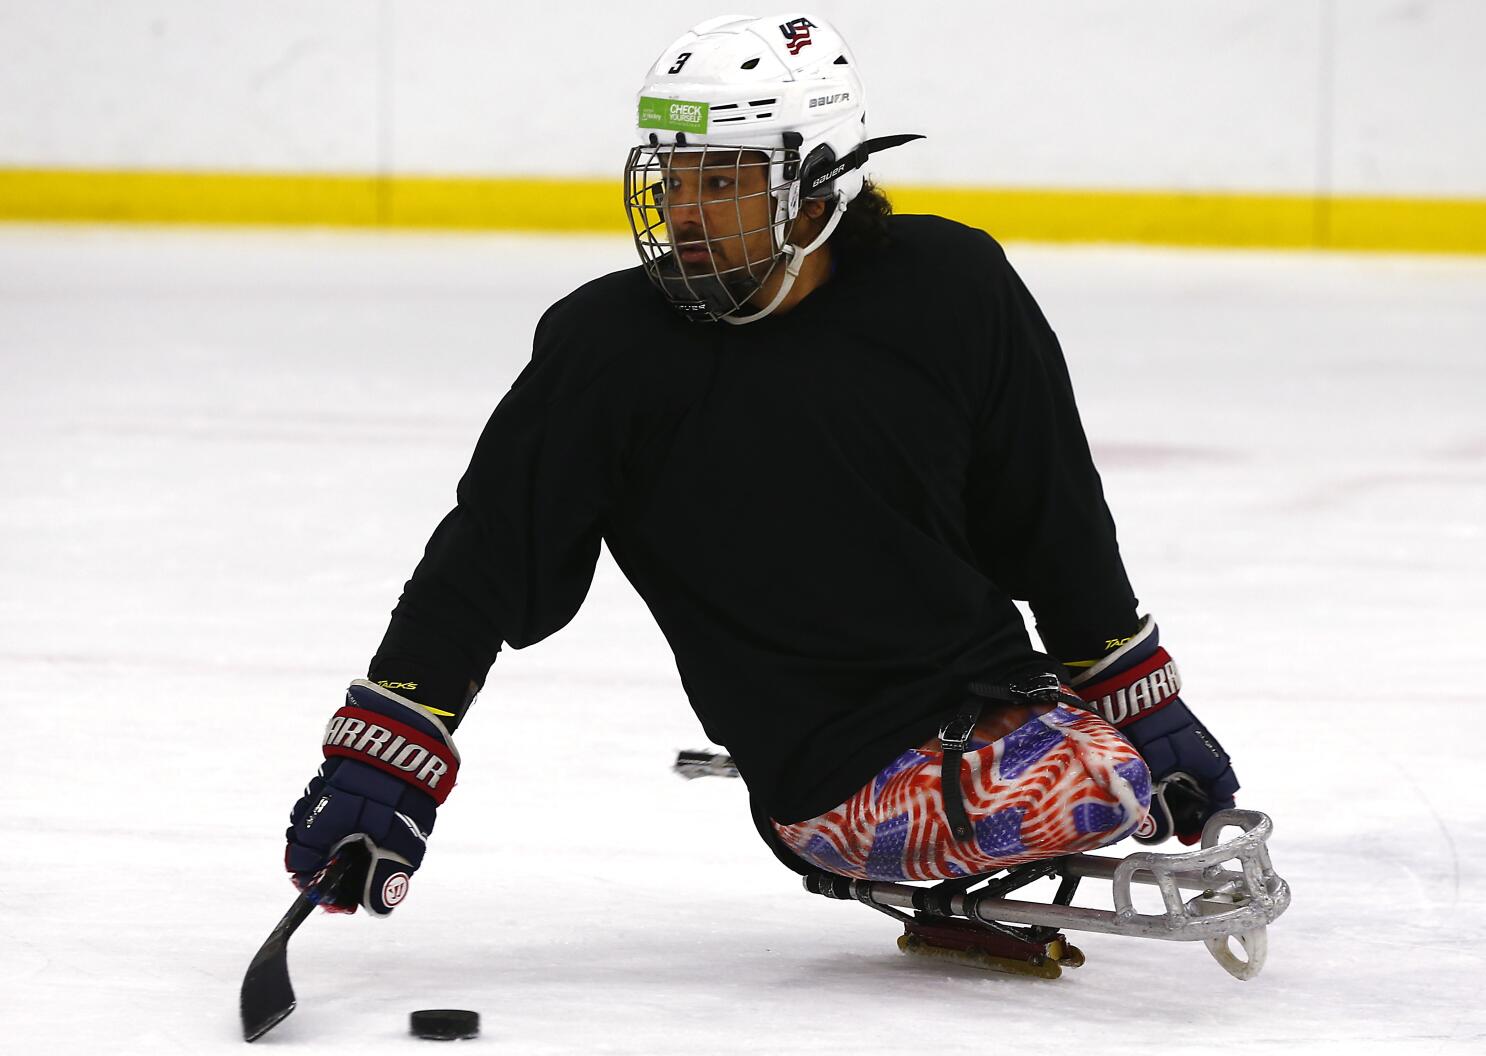 From sled hockey to RAGBRAI, Adaptive Sports Iowa wants to give